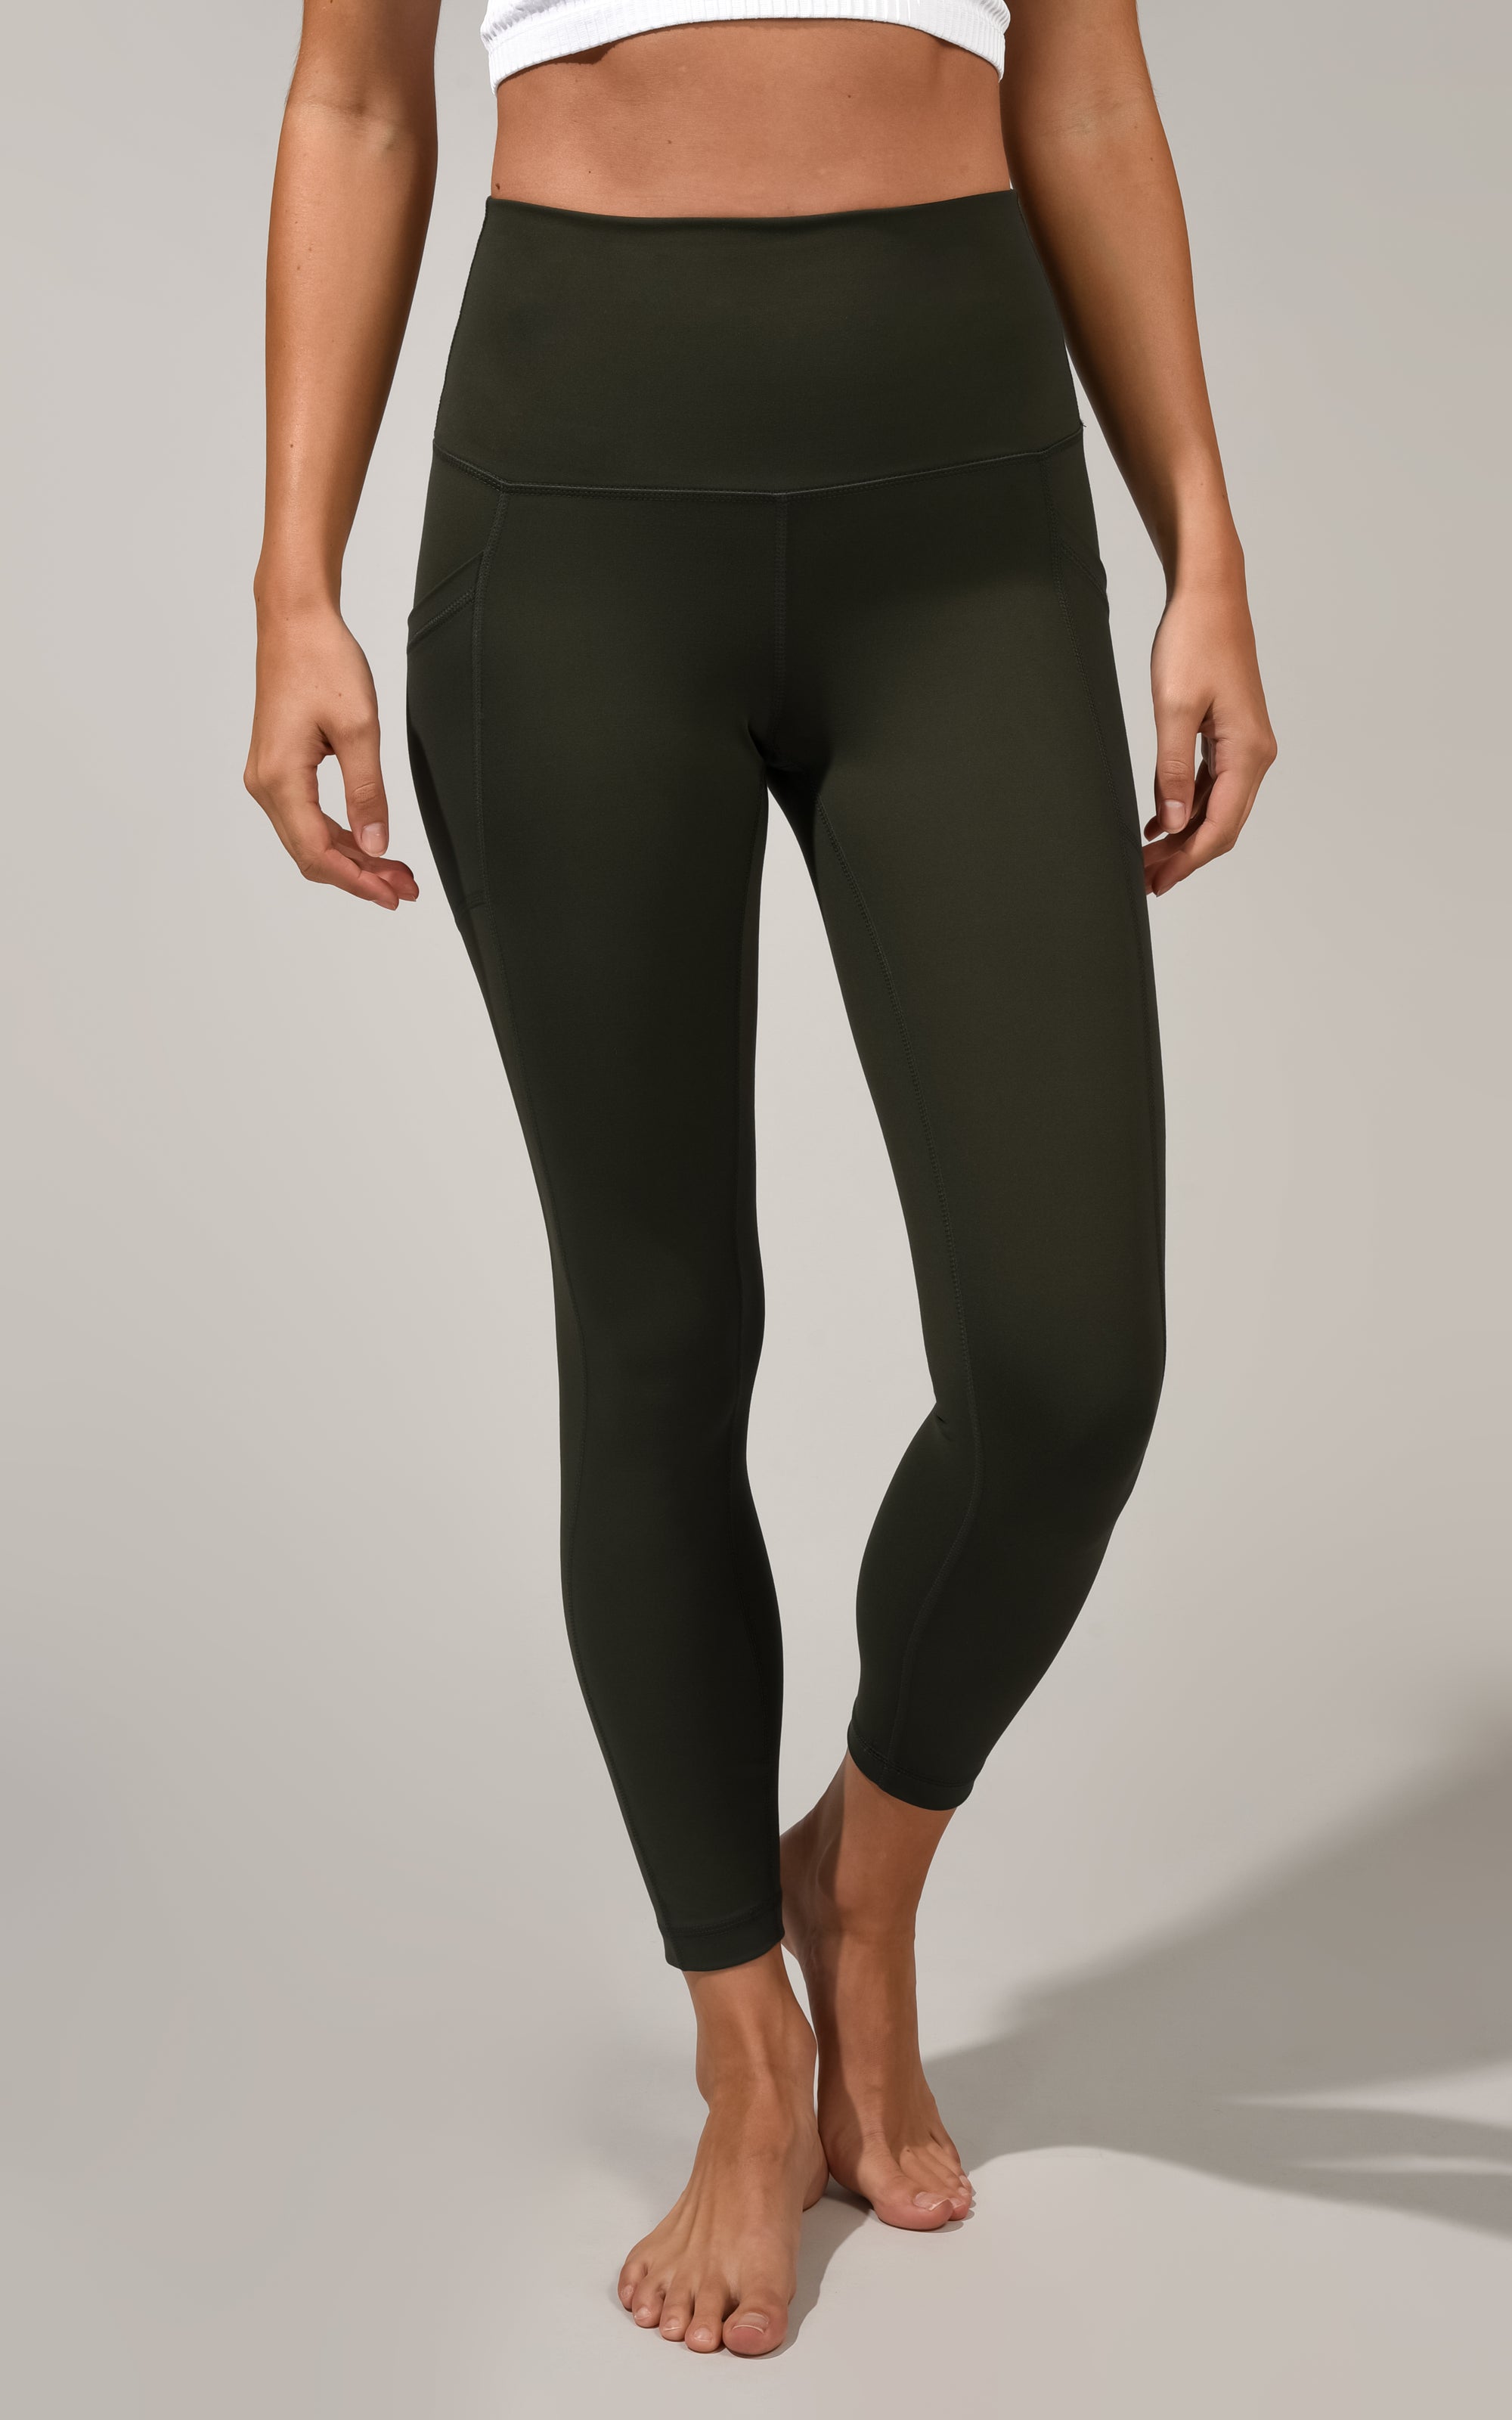 Yogalicious Lux Women's Size XS Green Yoga Shorts